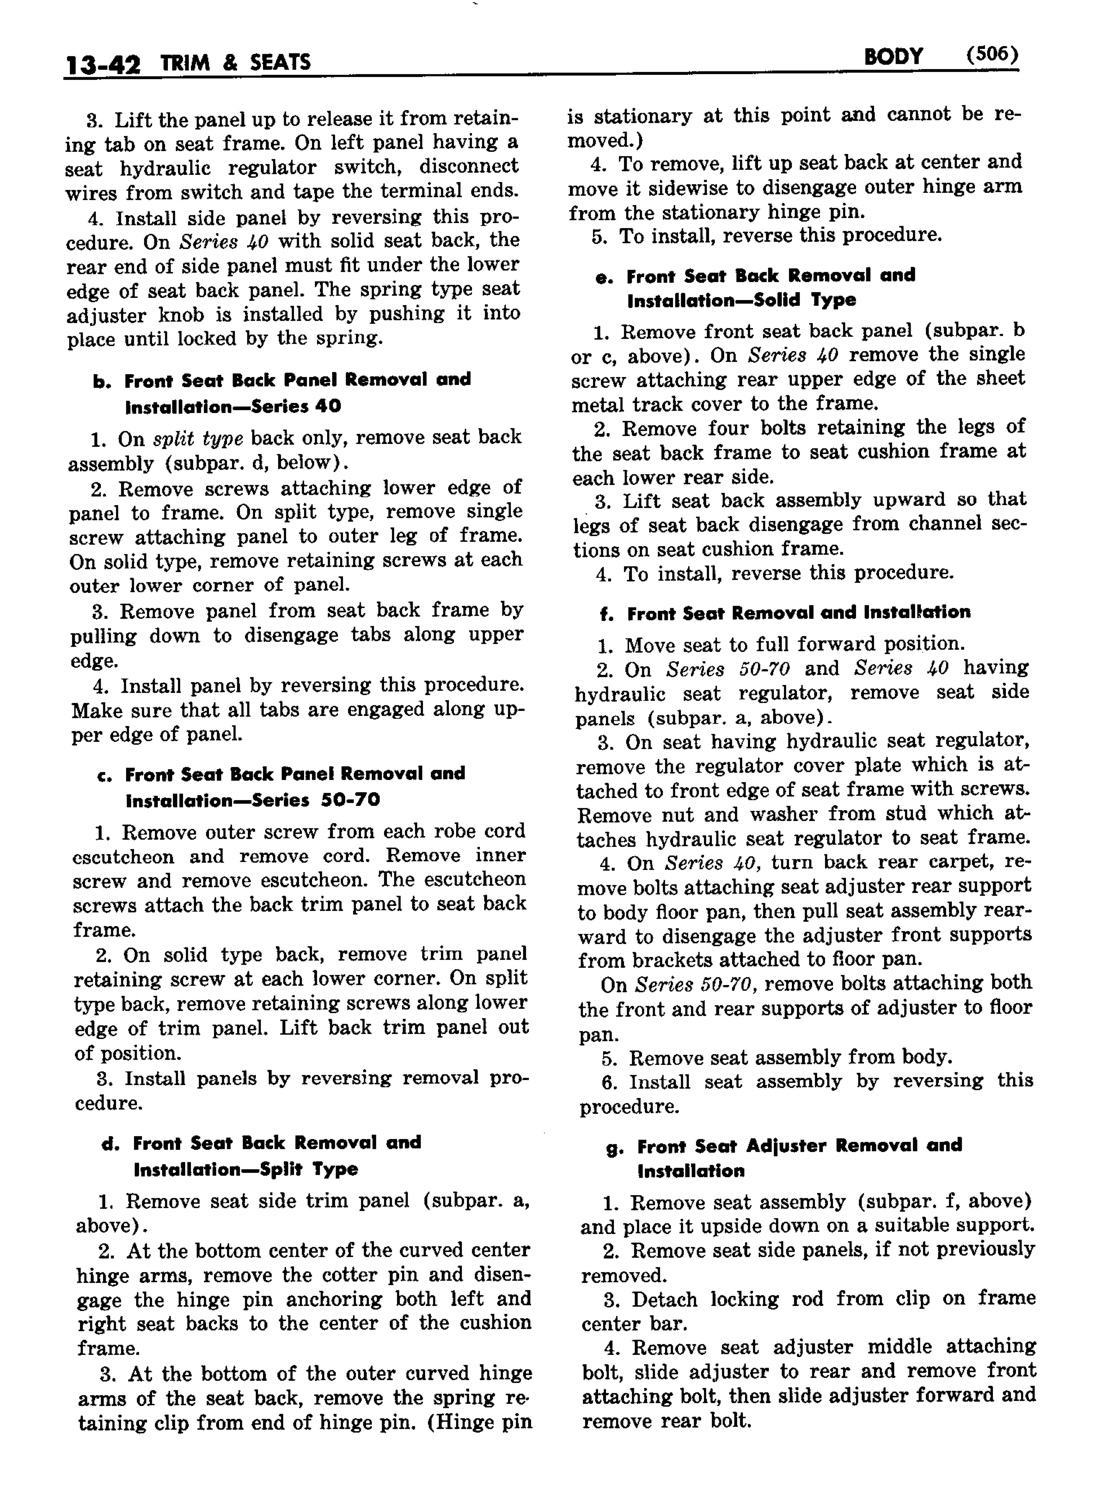 n_14 1952 Buick Shop Manual - Body-042-042.jpg